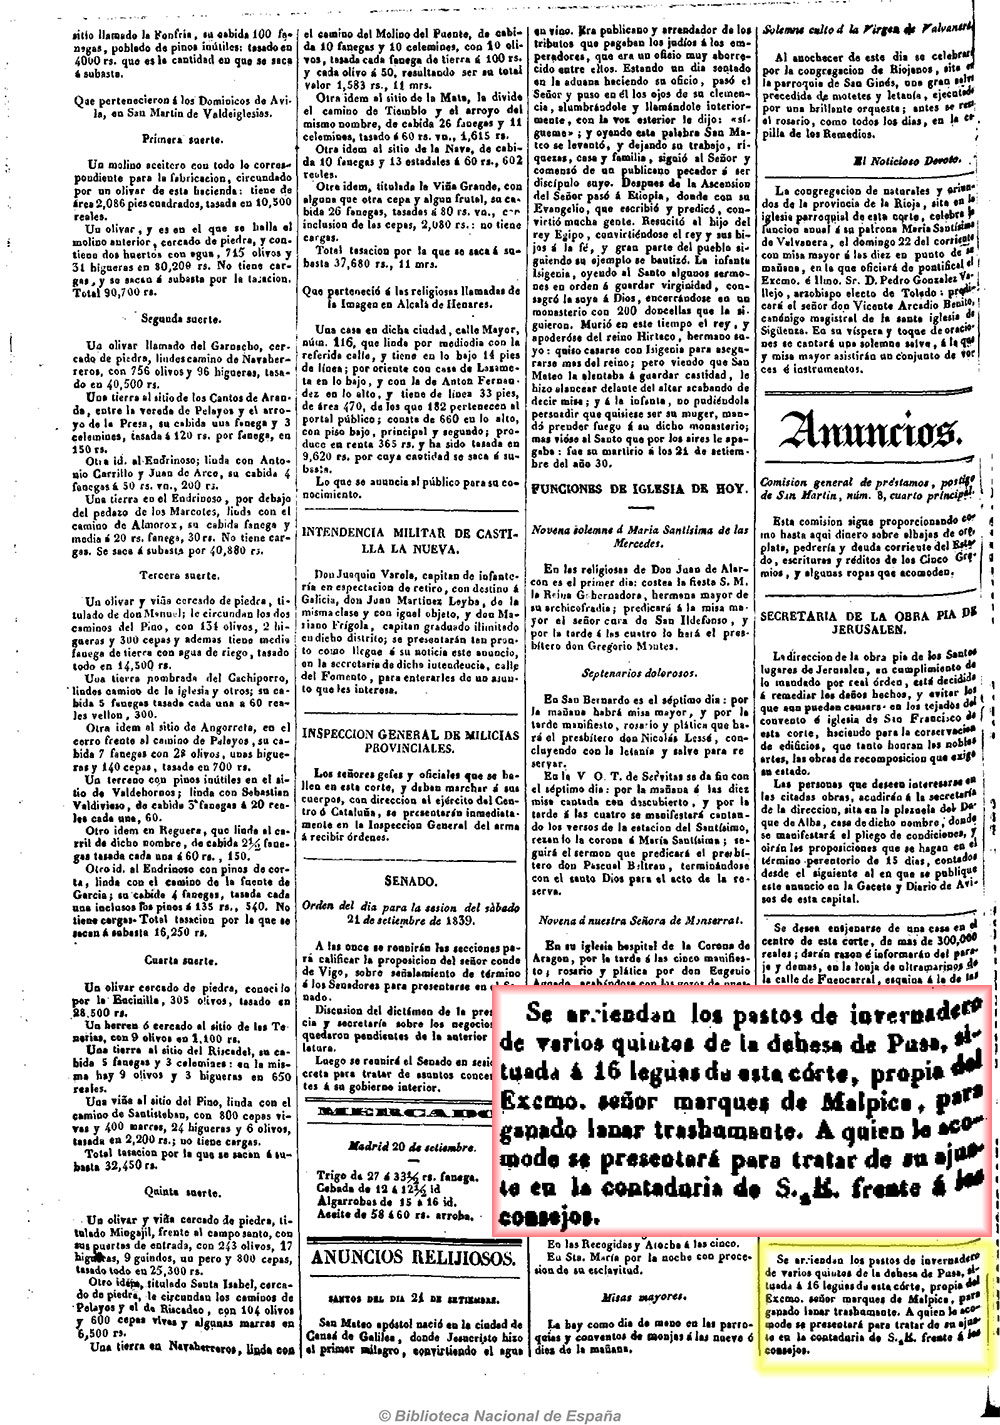 Diario de avisos de Madrid 1839_9_21_arriendopstosPusa